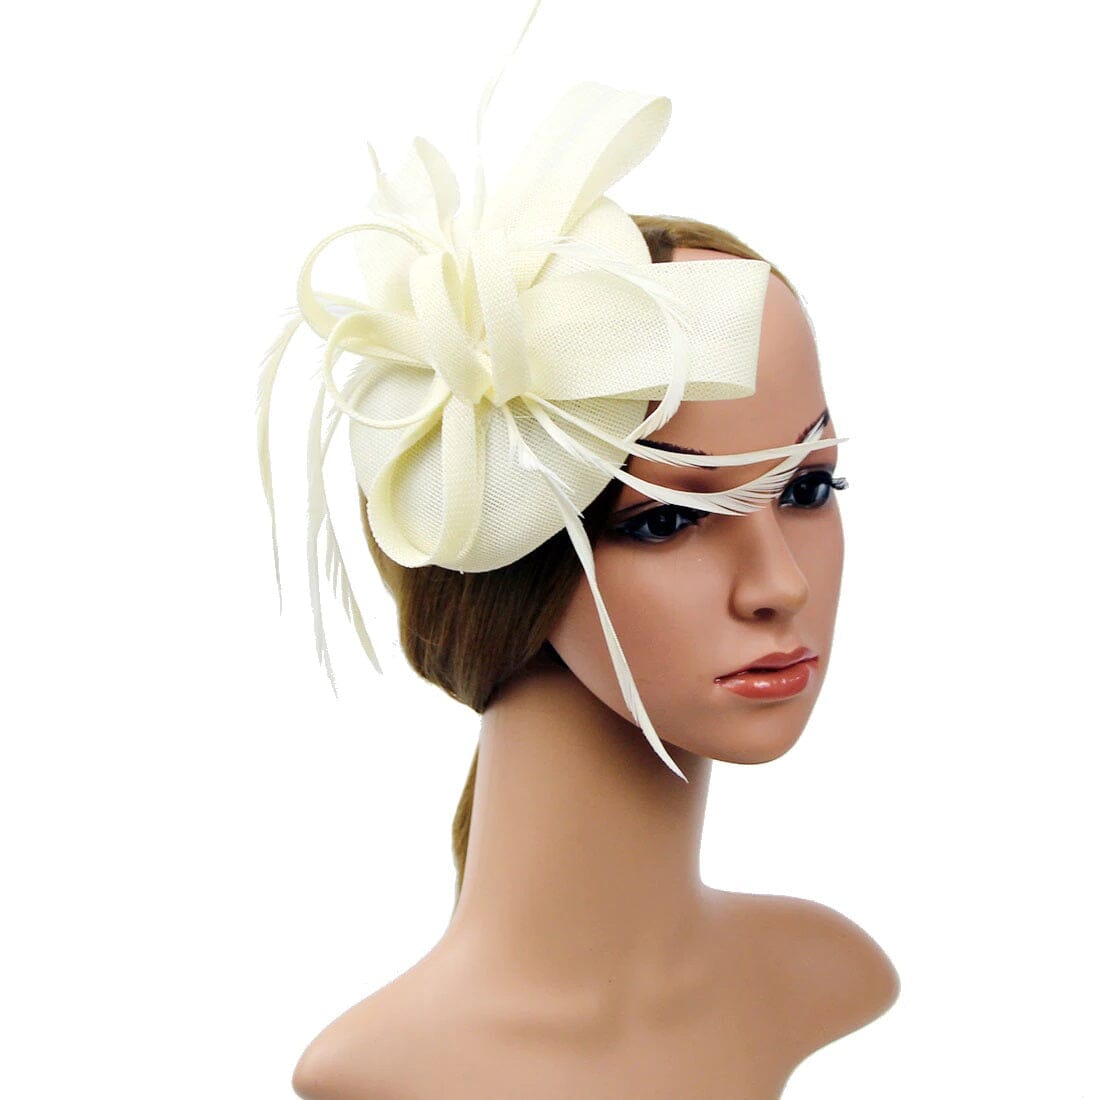 Women Fascinators Flower Ladies Pillbox Headband with clips Bridal Wedding Cocktail Tea Party Hat Hat jehouze 7 Ivory 